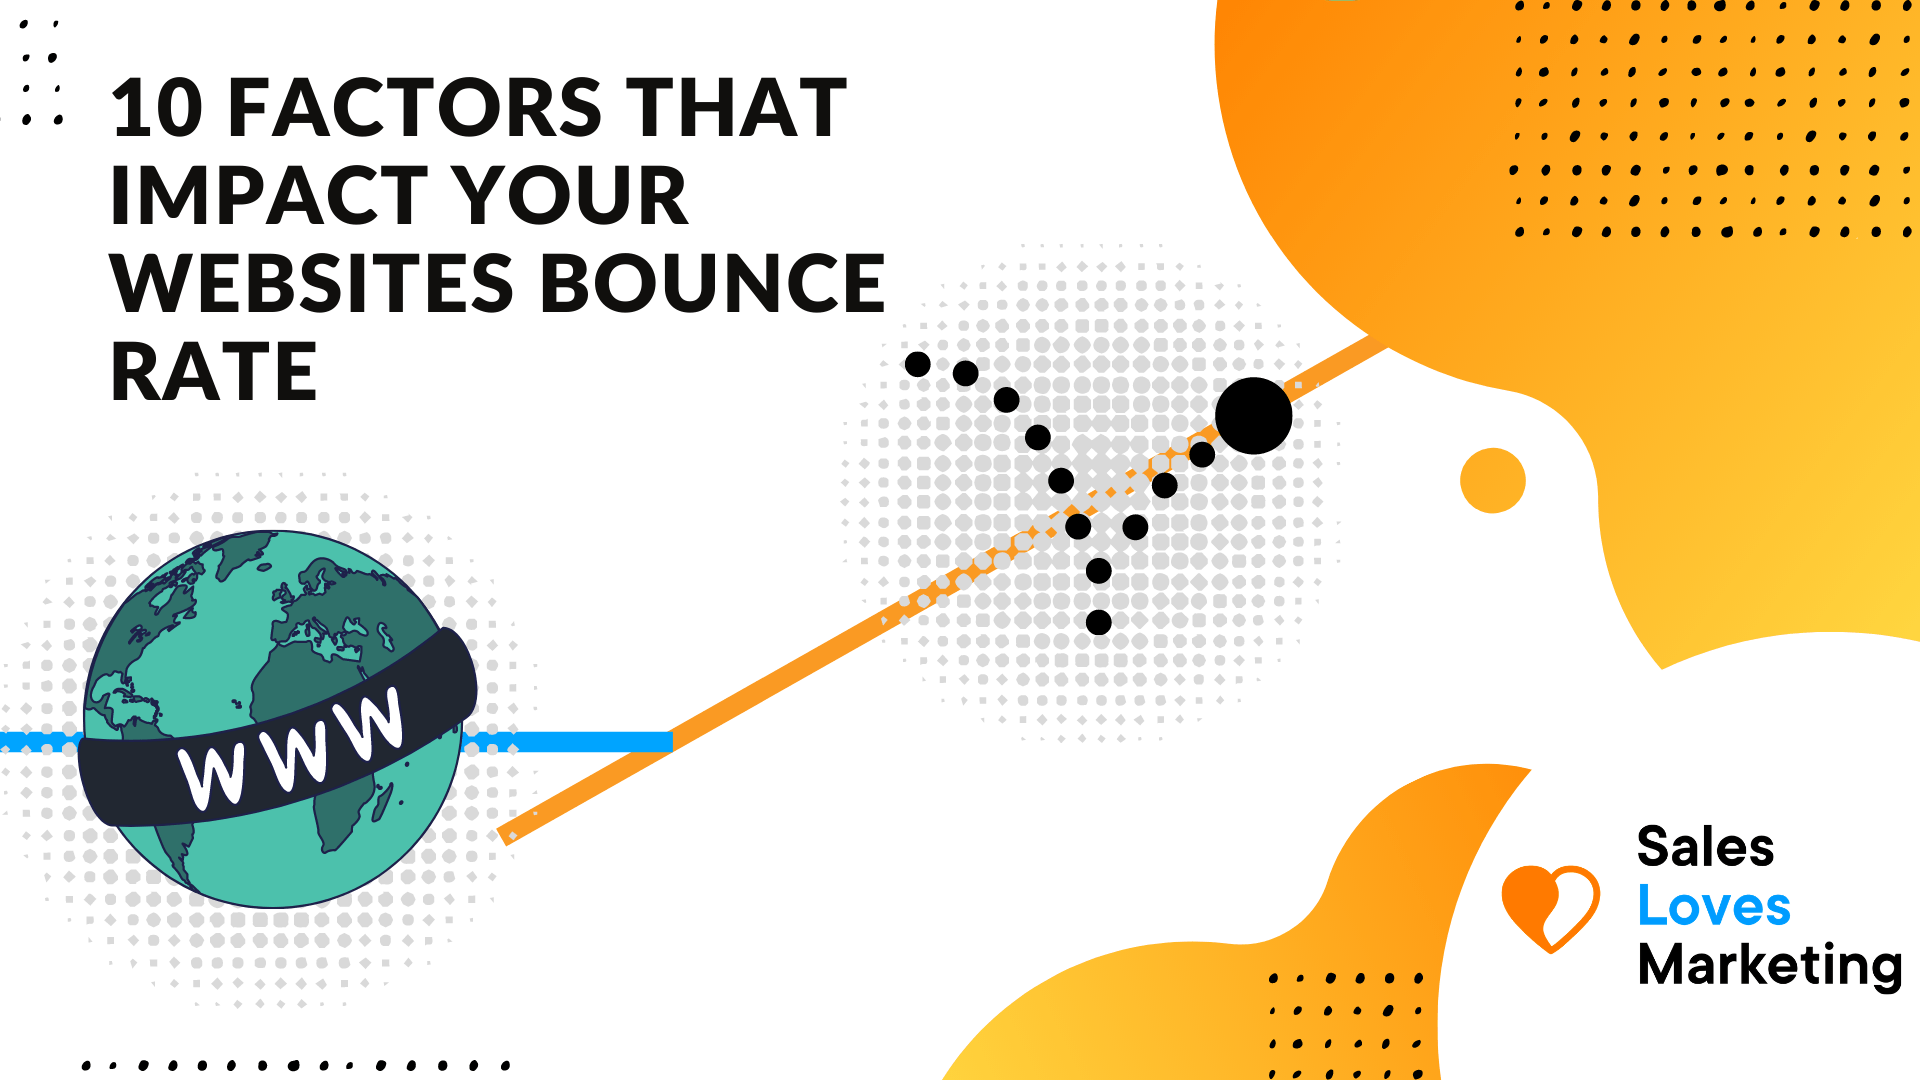 10 Factors That Impact Your Websites Bounce Rate